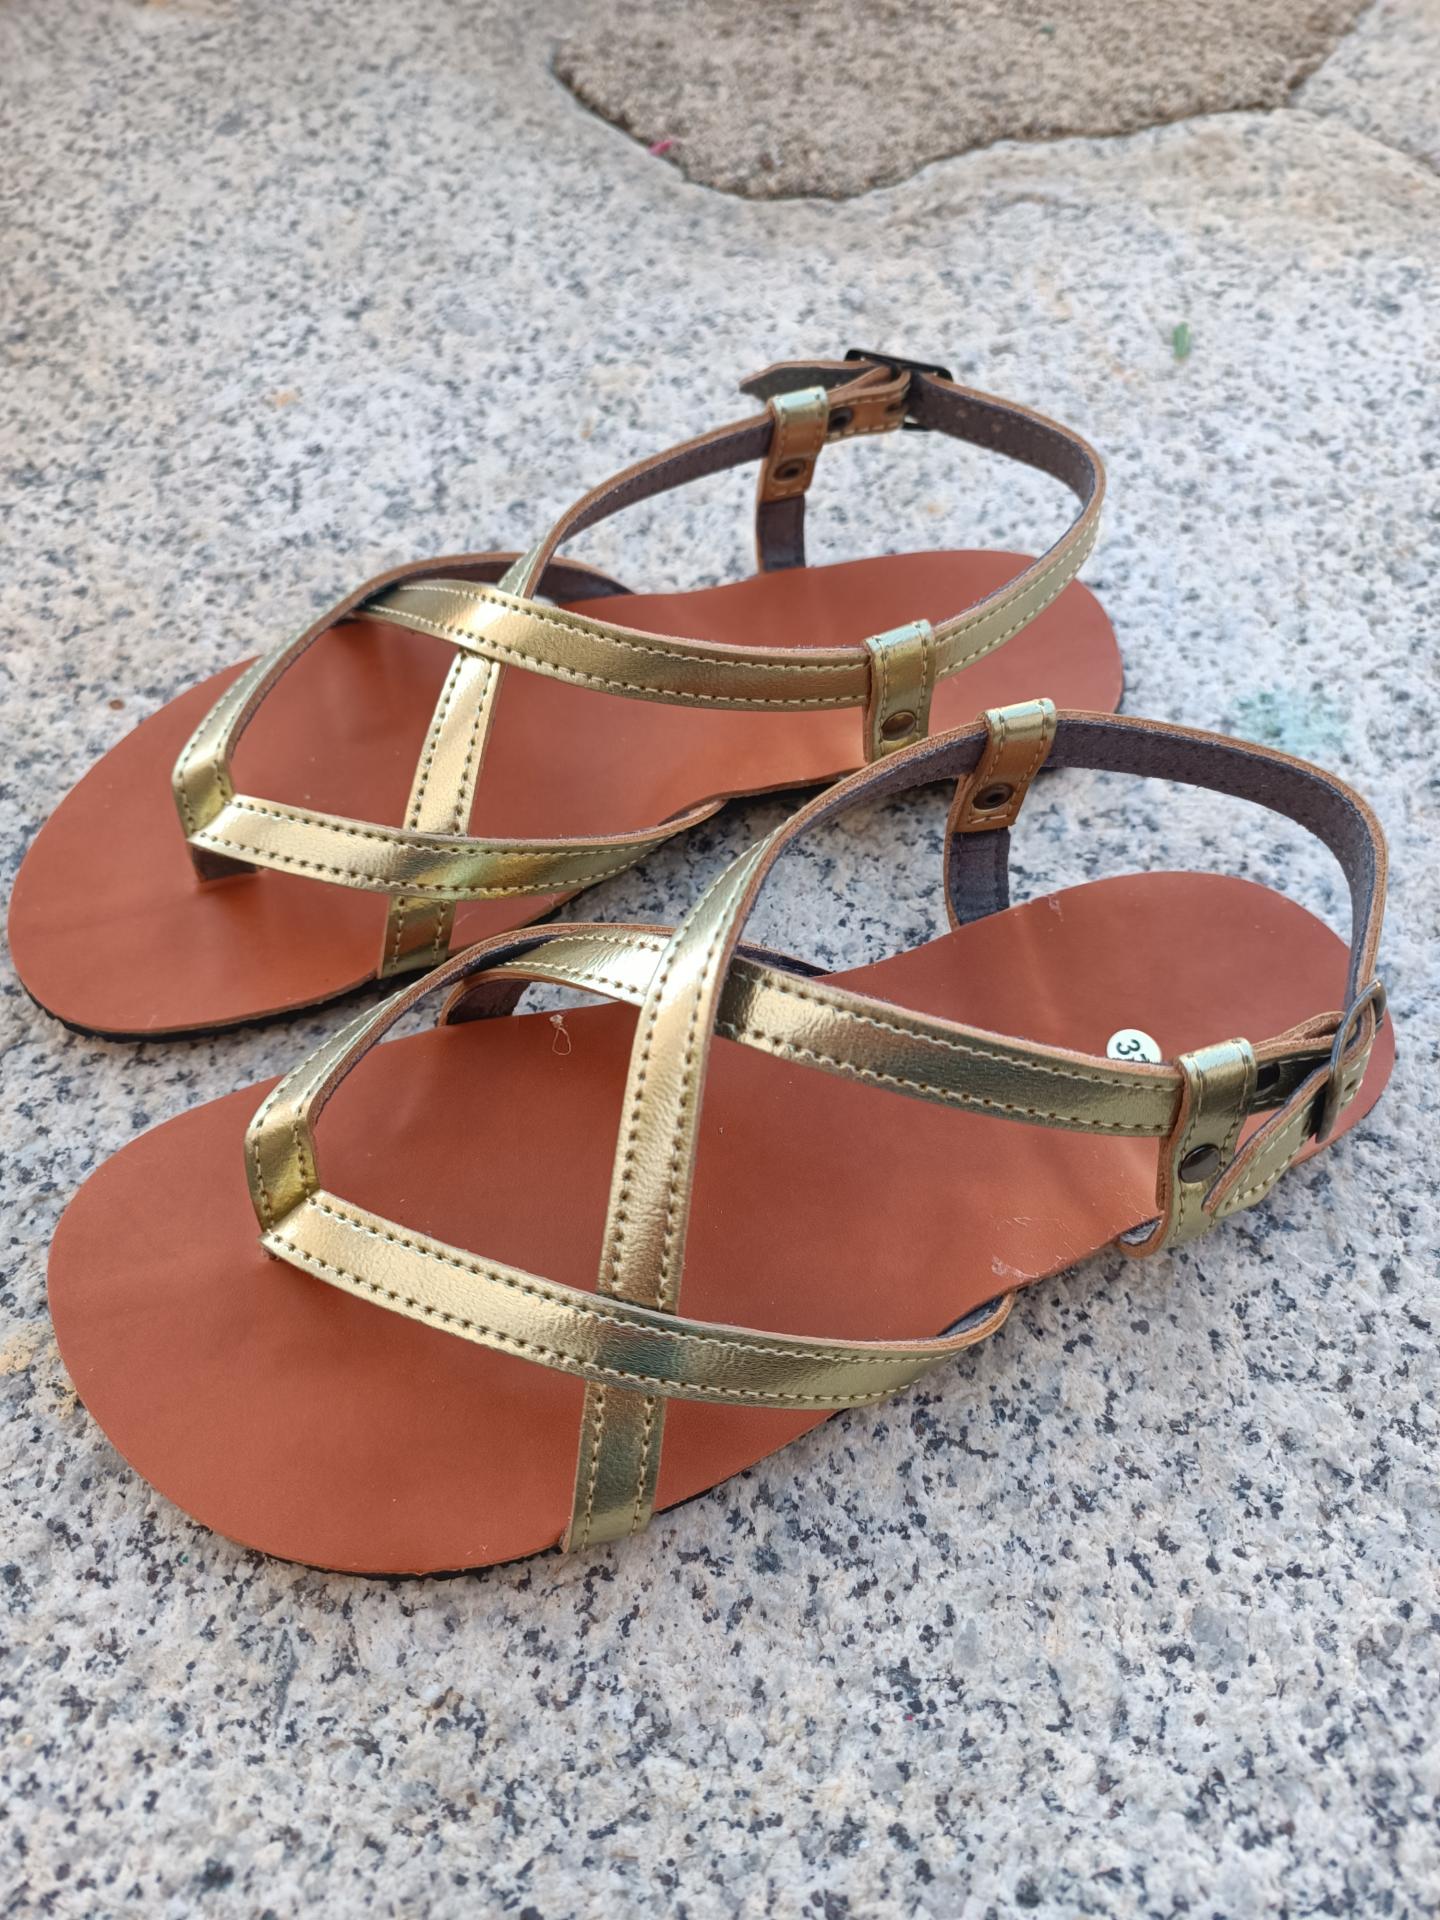 BAREFOOT HUIDOBRO color oro, sandalias para mujer y hombre, calzado descalzo, sandalias veganas, eco-friendly, barefoot.